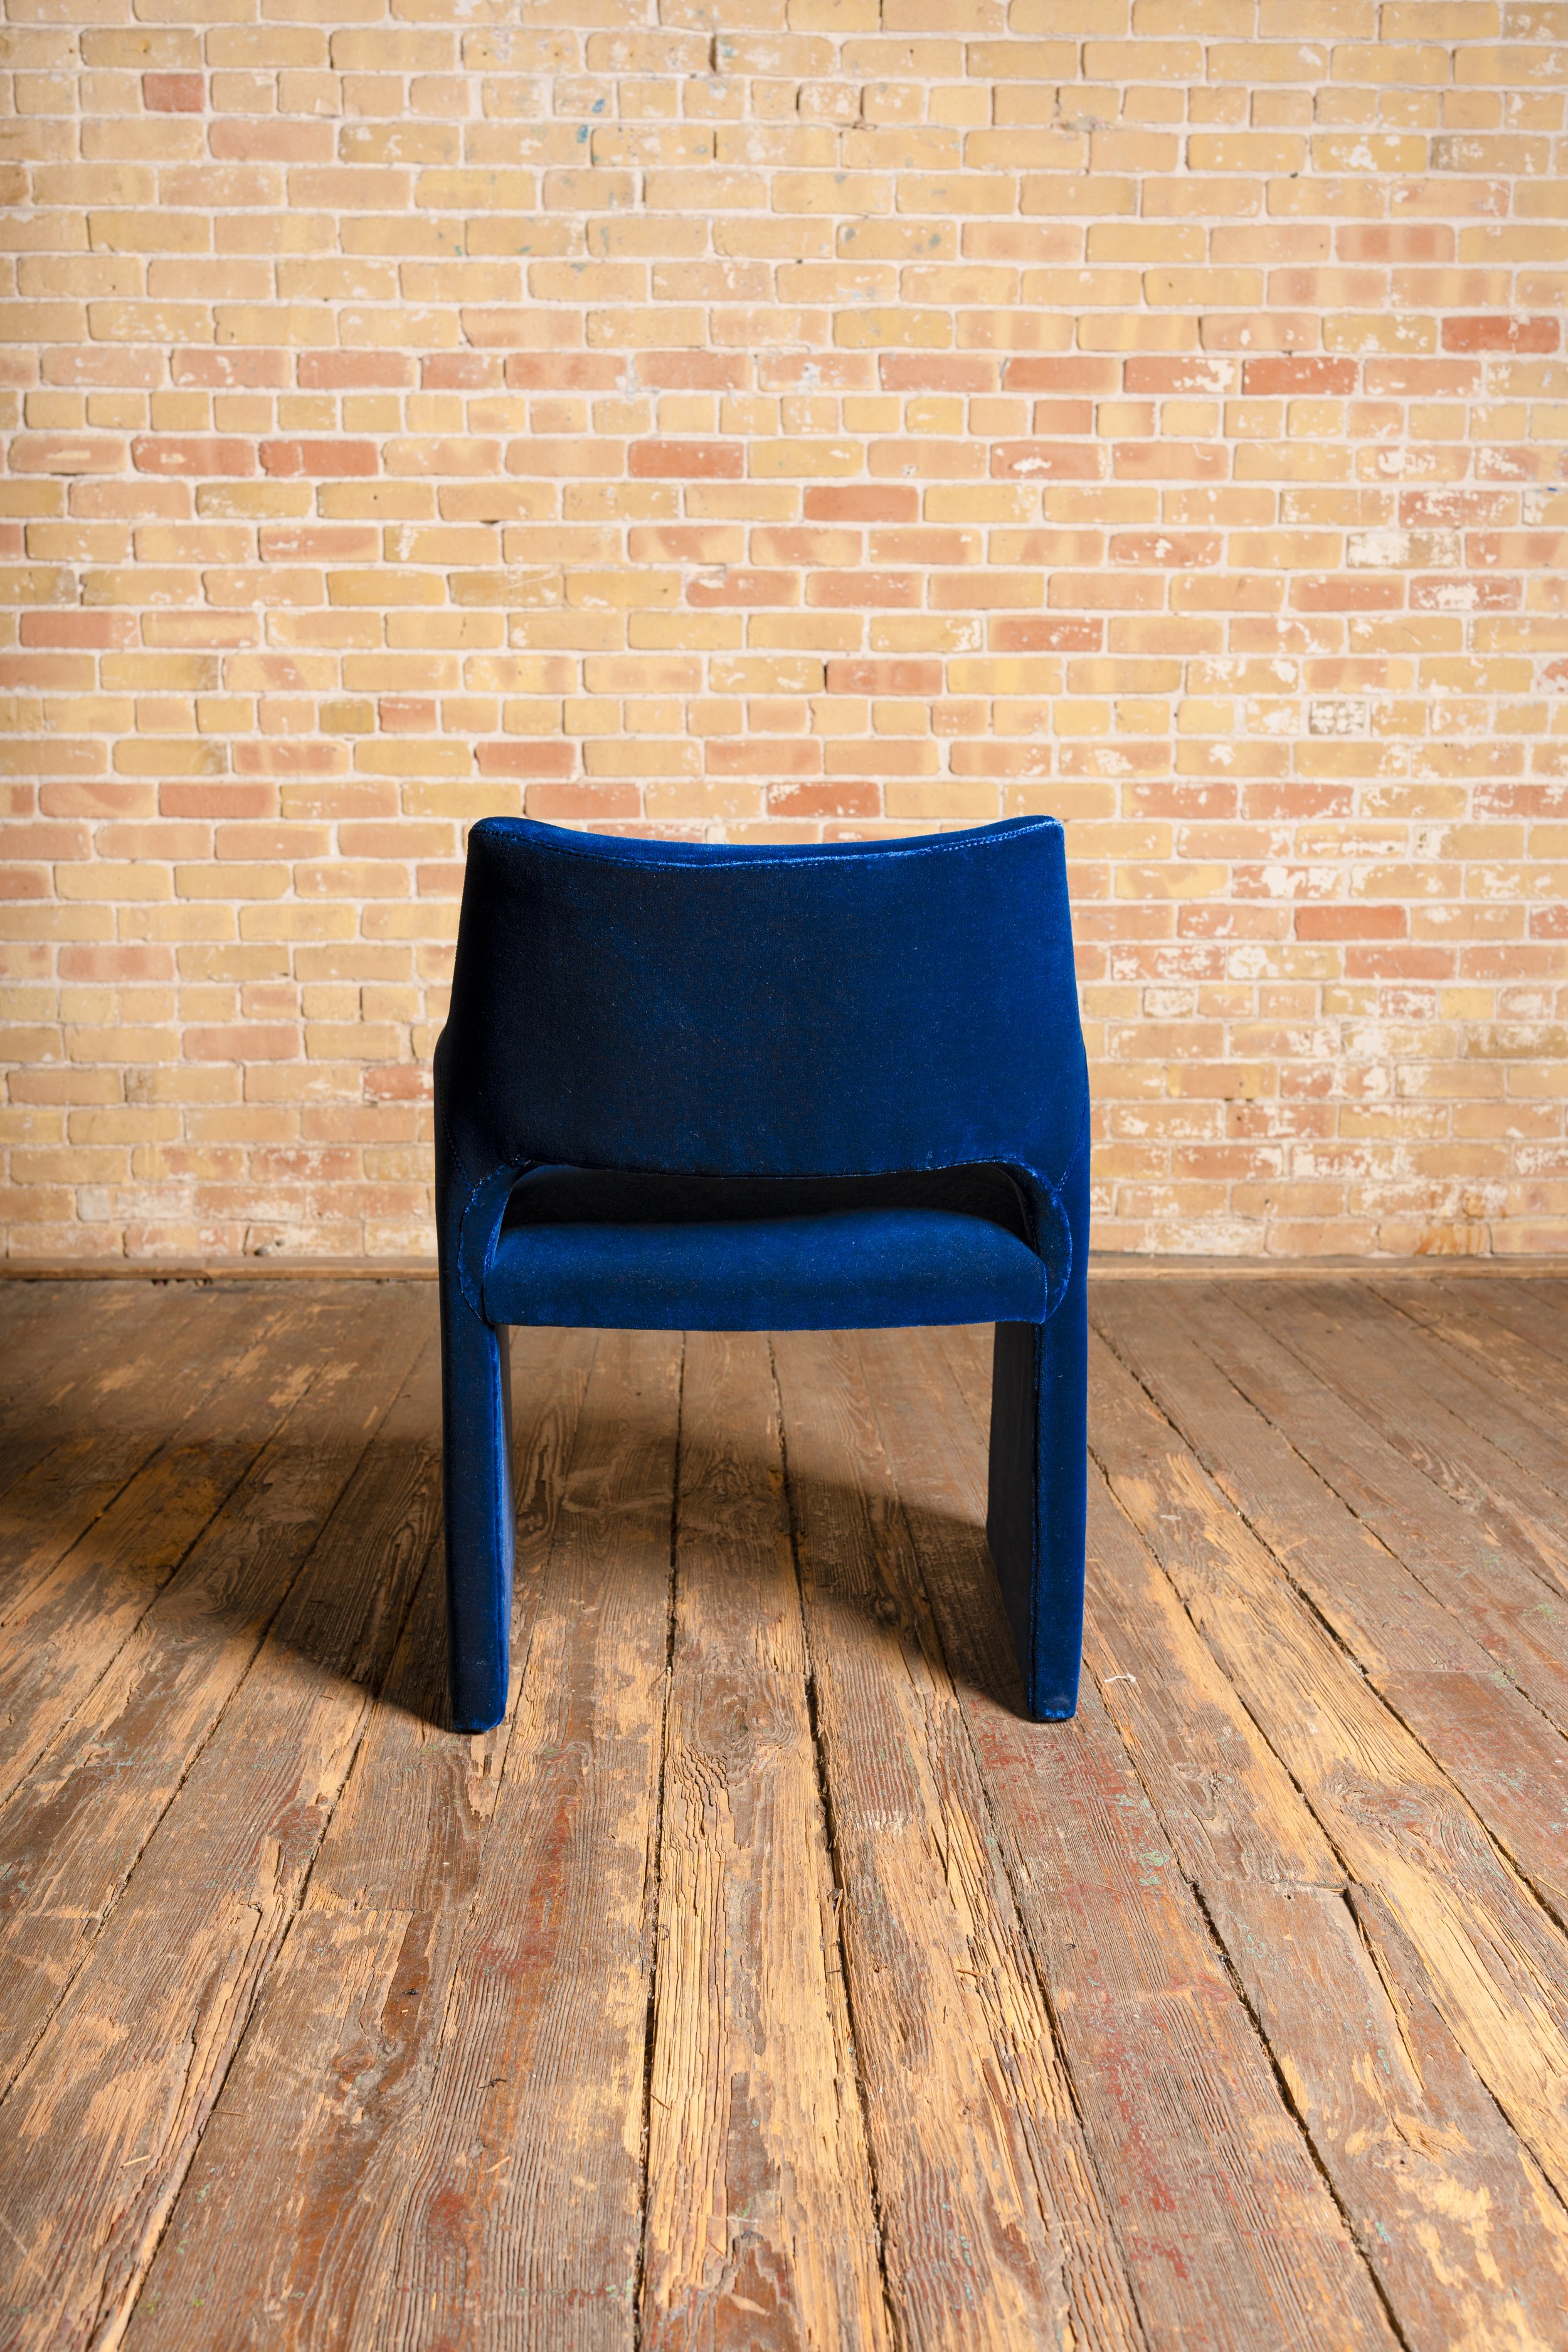 Blue chair BACK.jpg